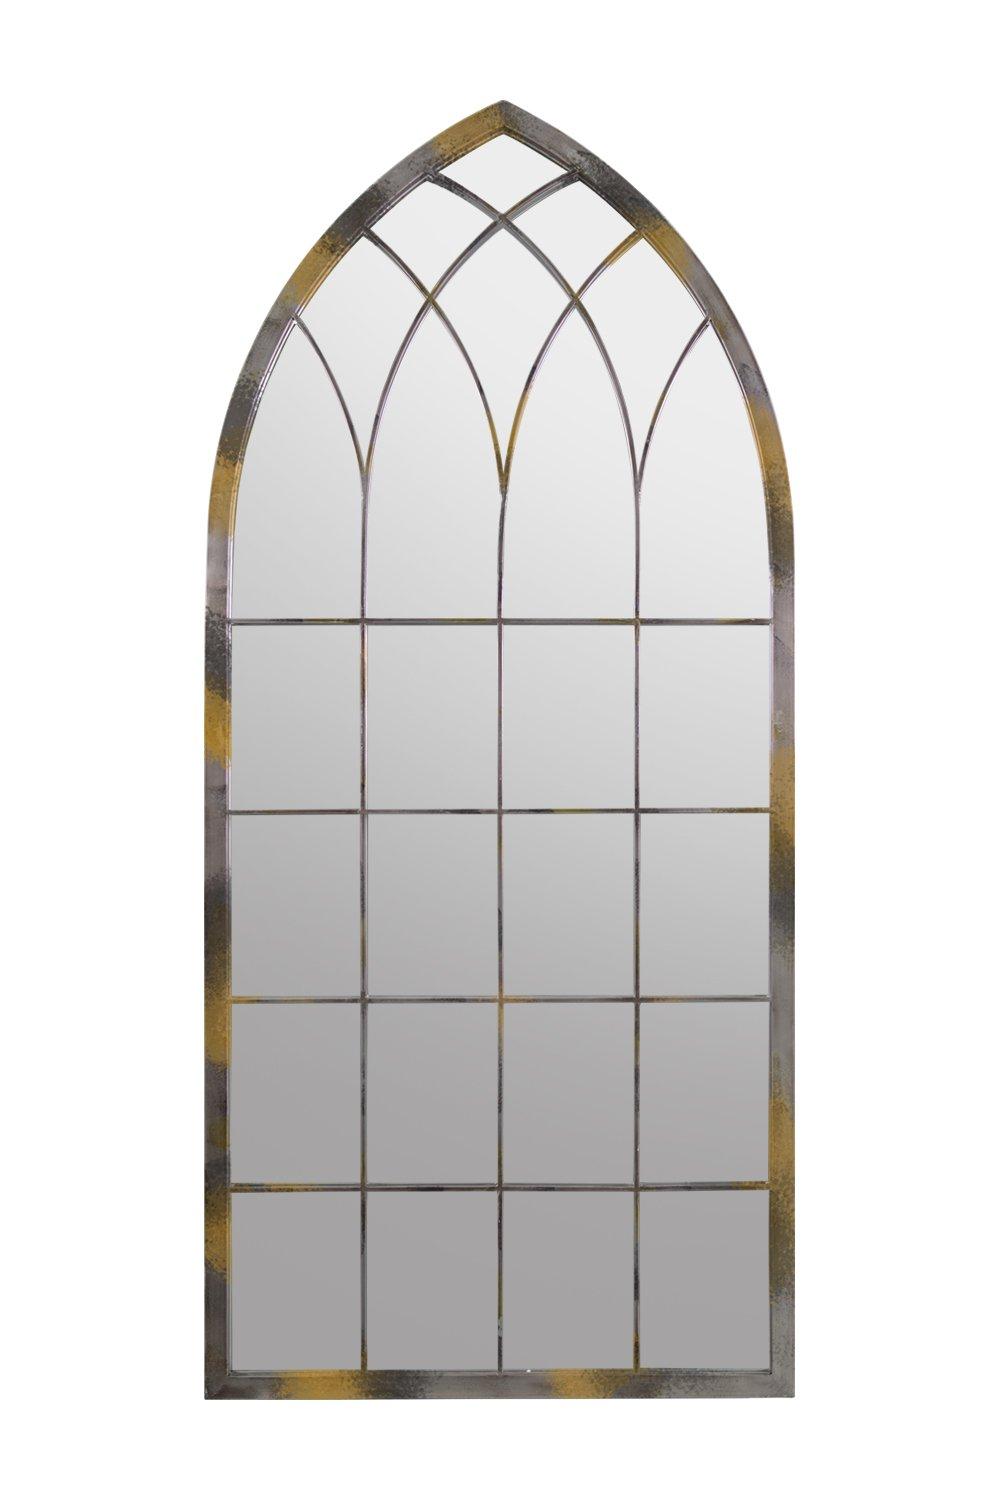 Somerley Rustic Arch Full Length Large Metal Garden Mirror 161 x 72 CM